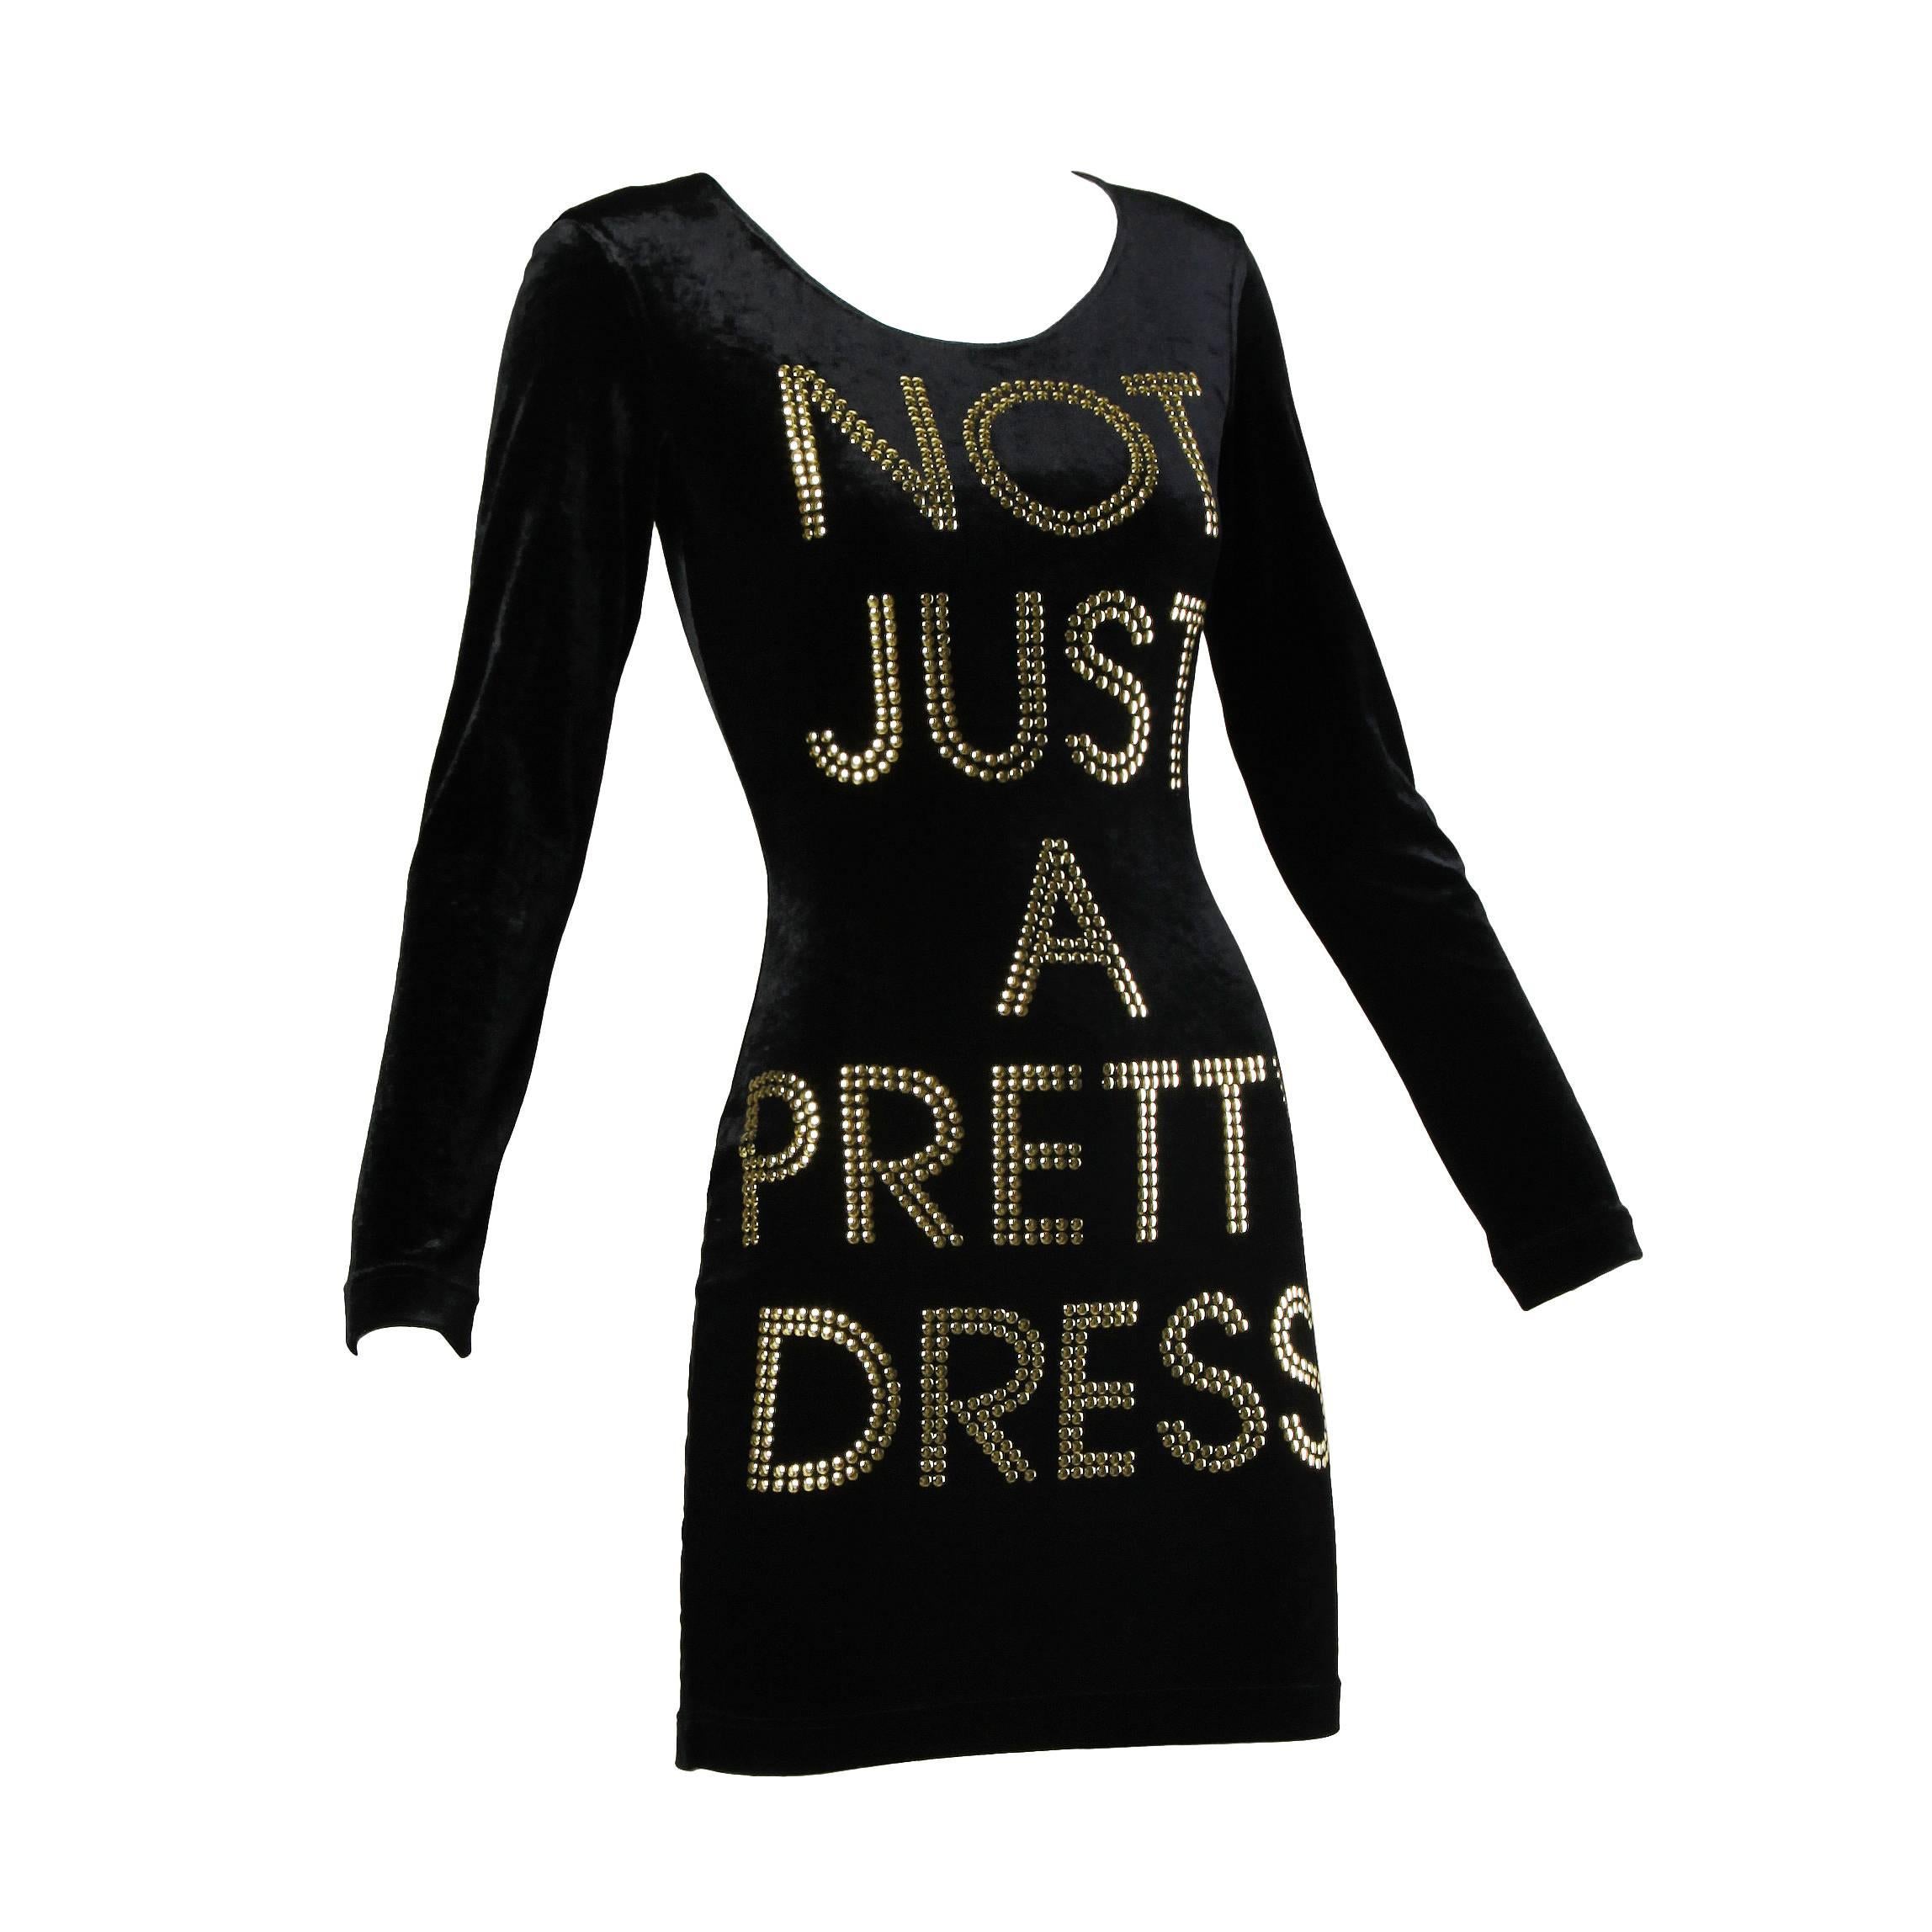 Moschino "NOT JUST A PRETTY DRESS" as worn by La La Anthony